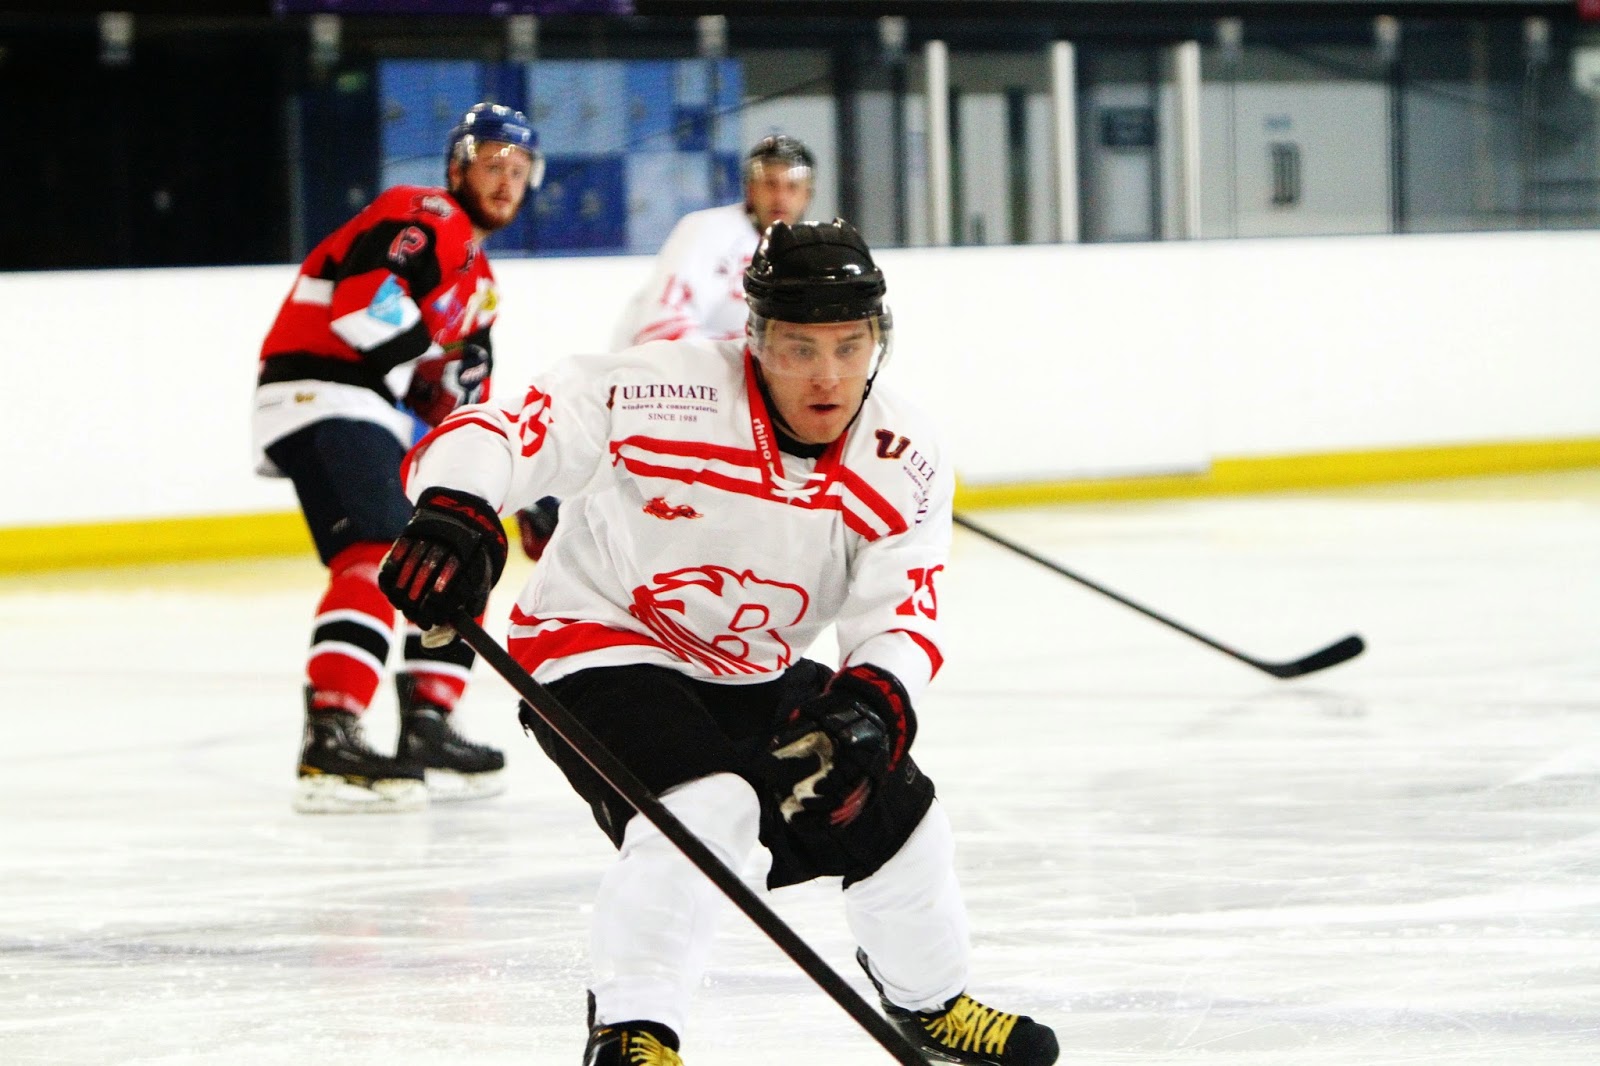 New Star Sykes seeks success | British Ice Hockey